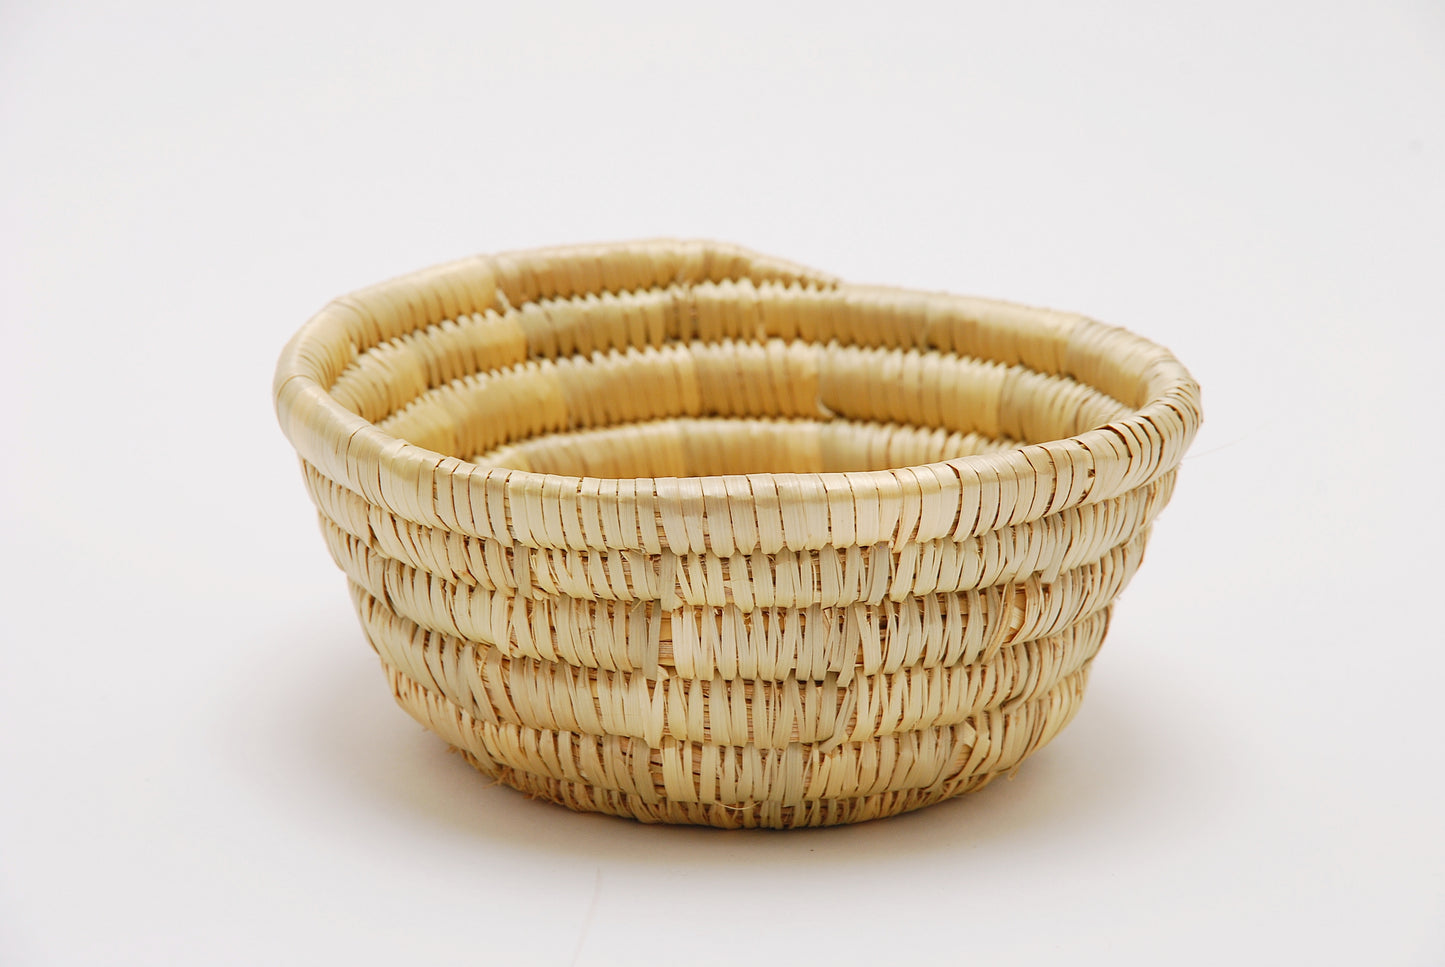 Bakuli woven bowls